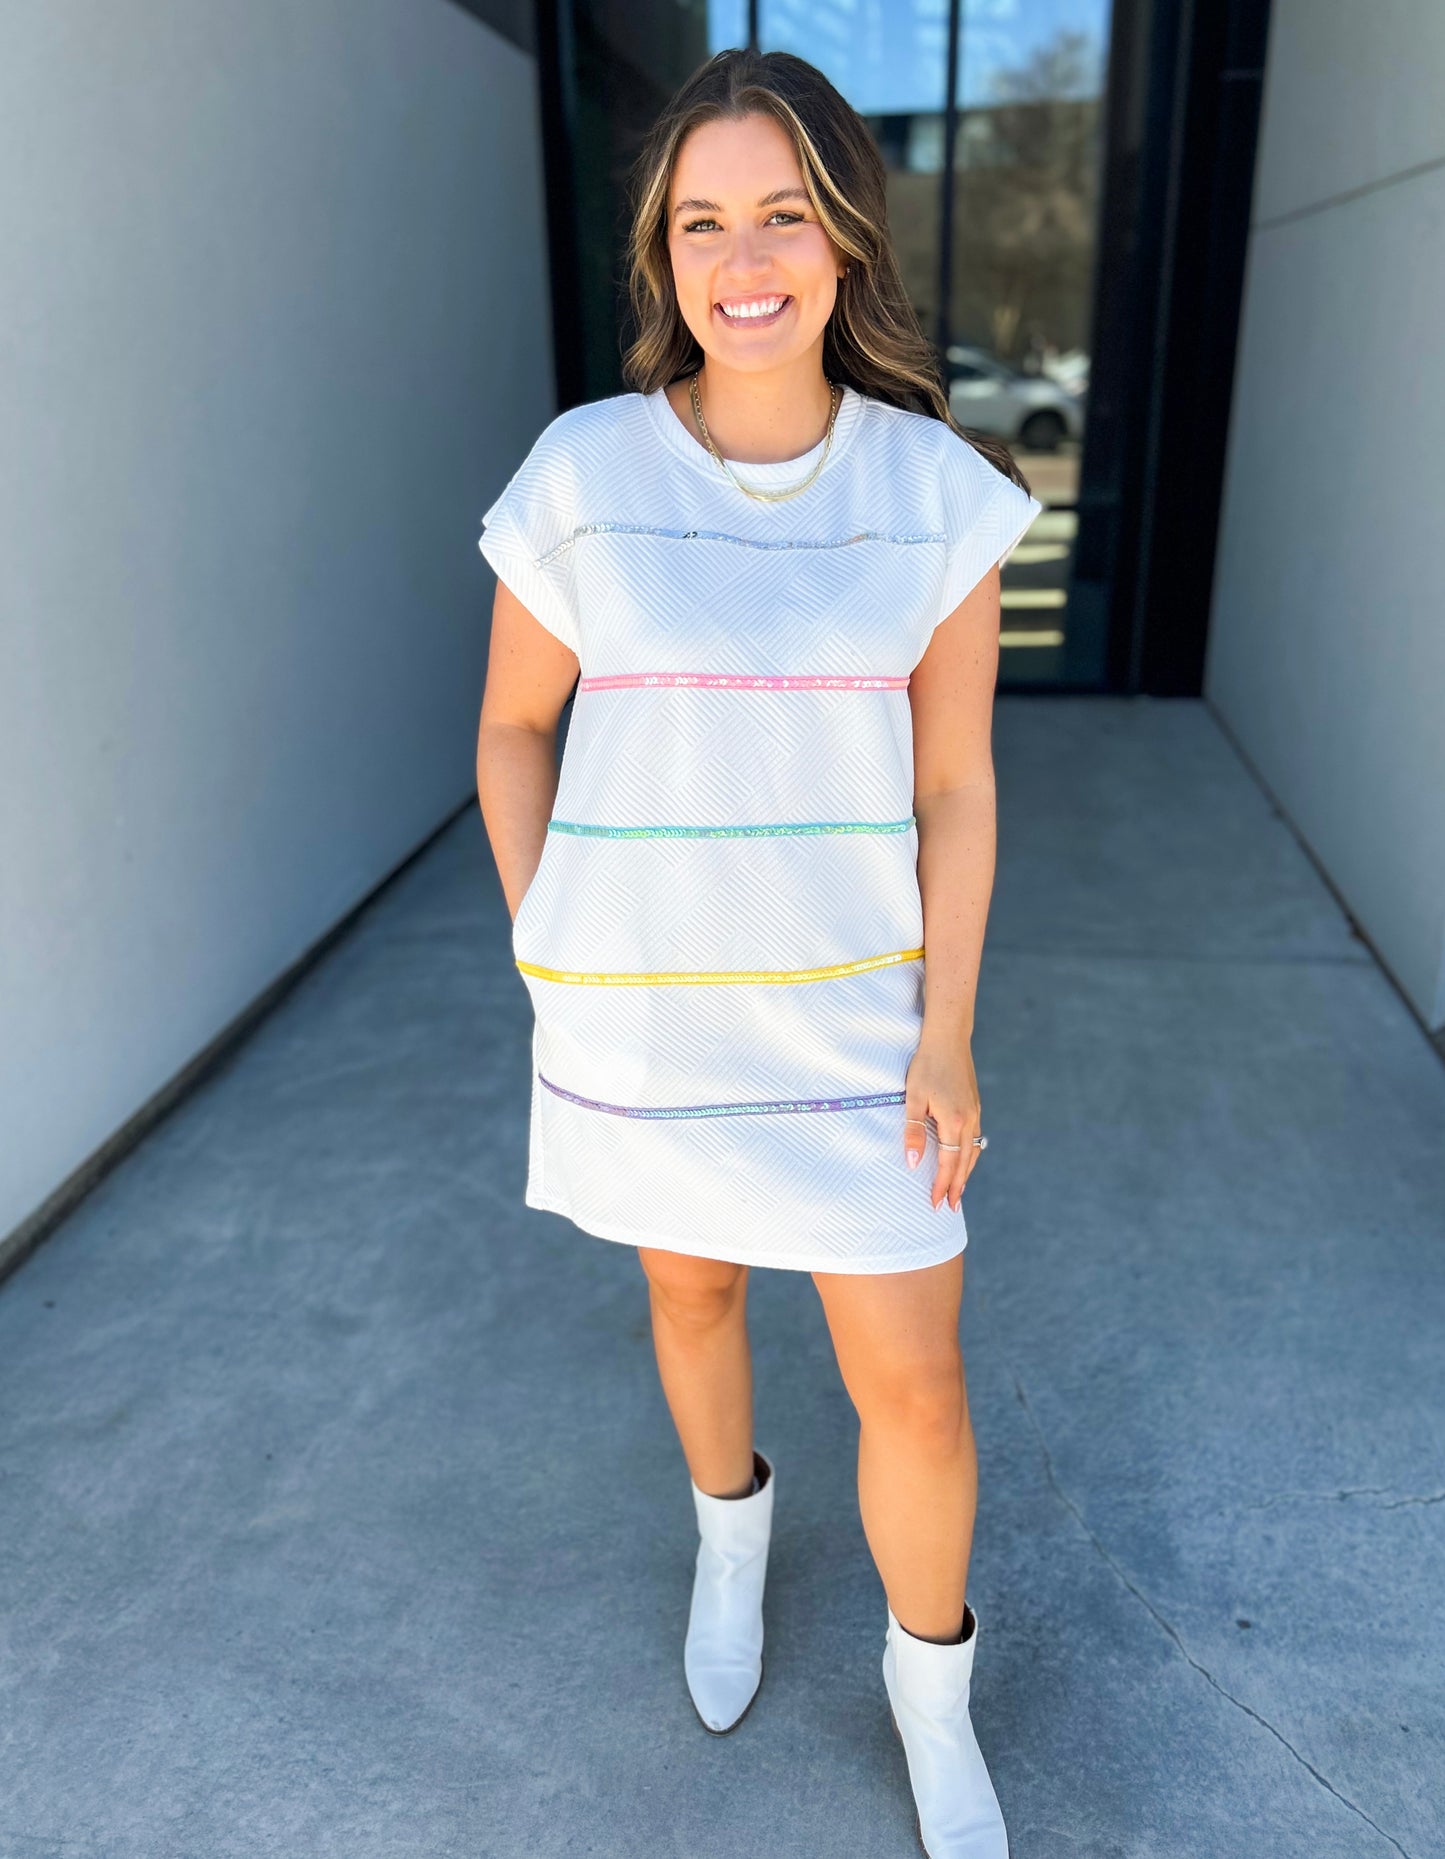 Ayana Rainbow Striped Textured Dress (White)